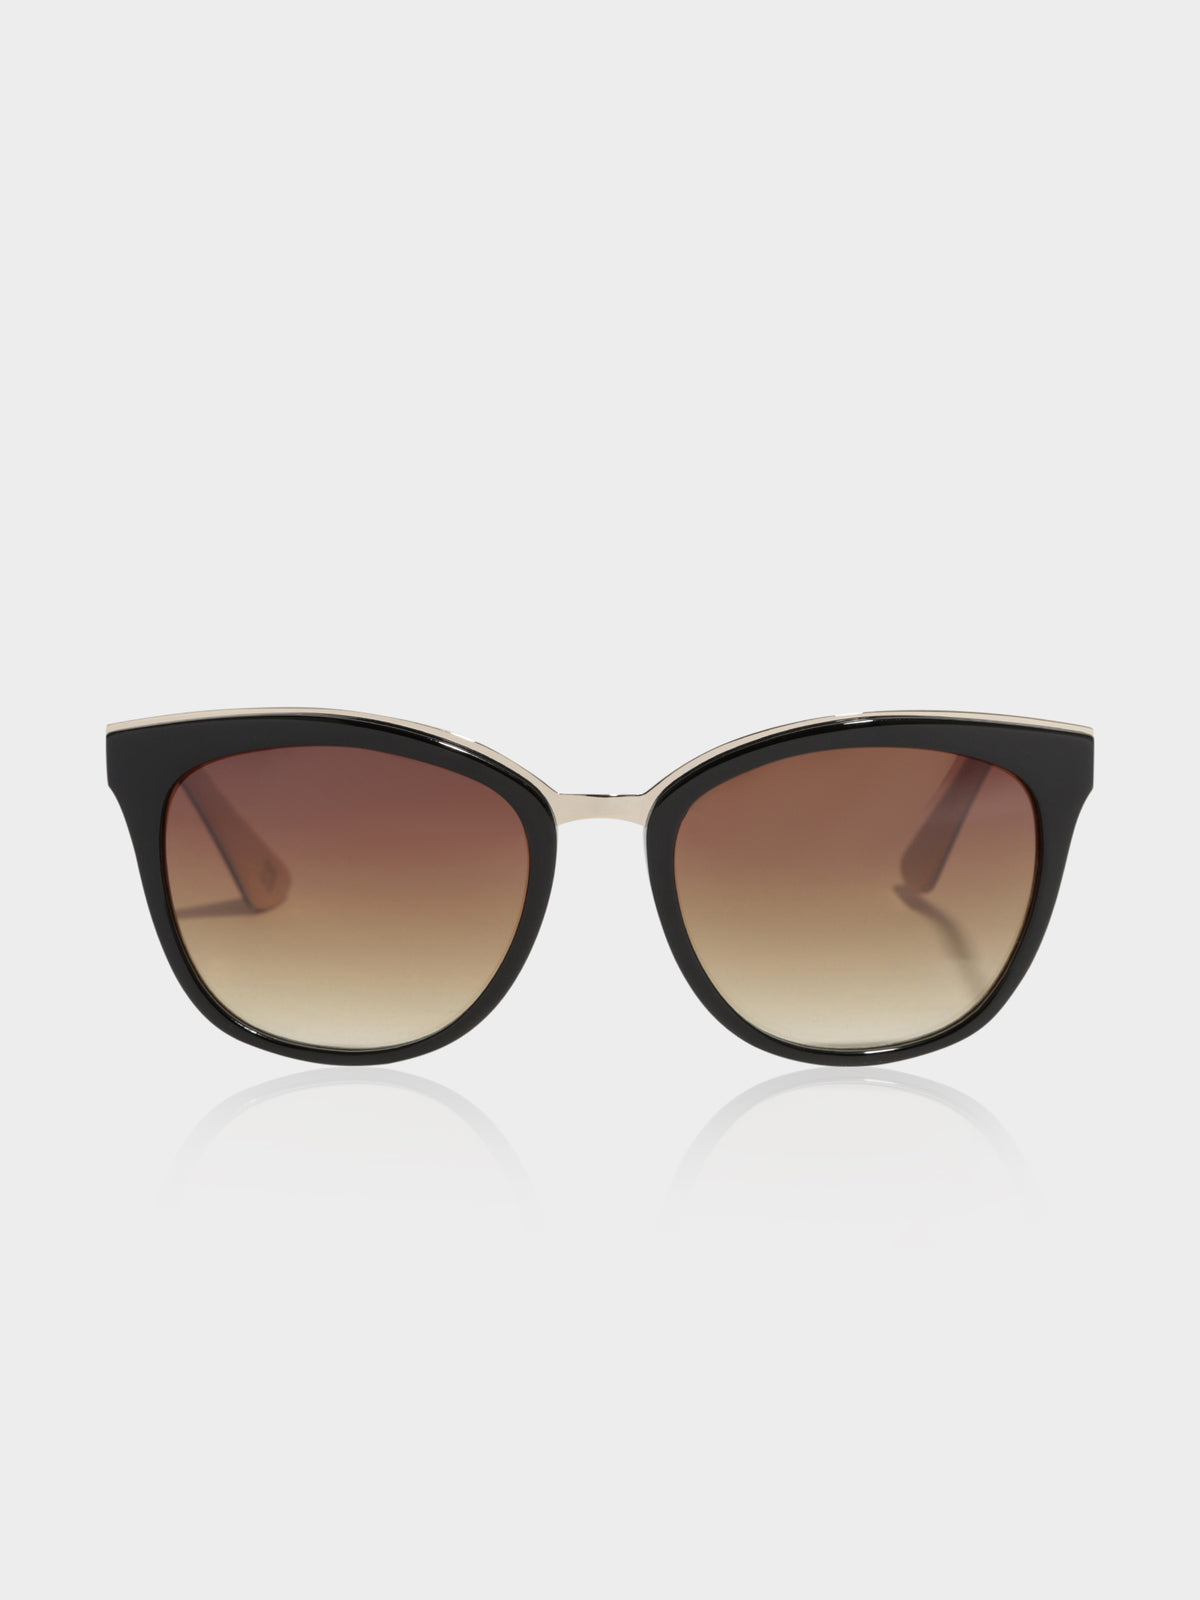 CL7546 Mikonos Cat Eye Sunglasses in Black